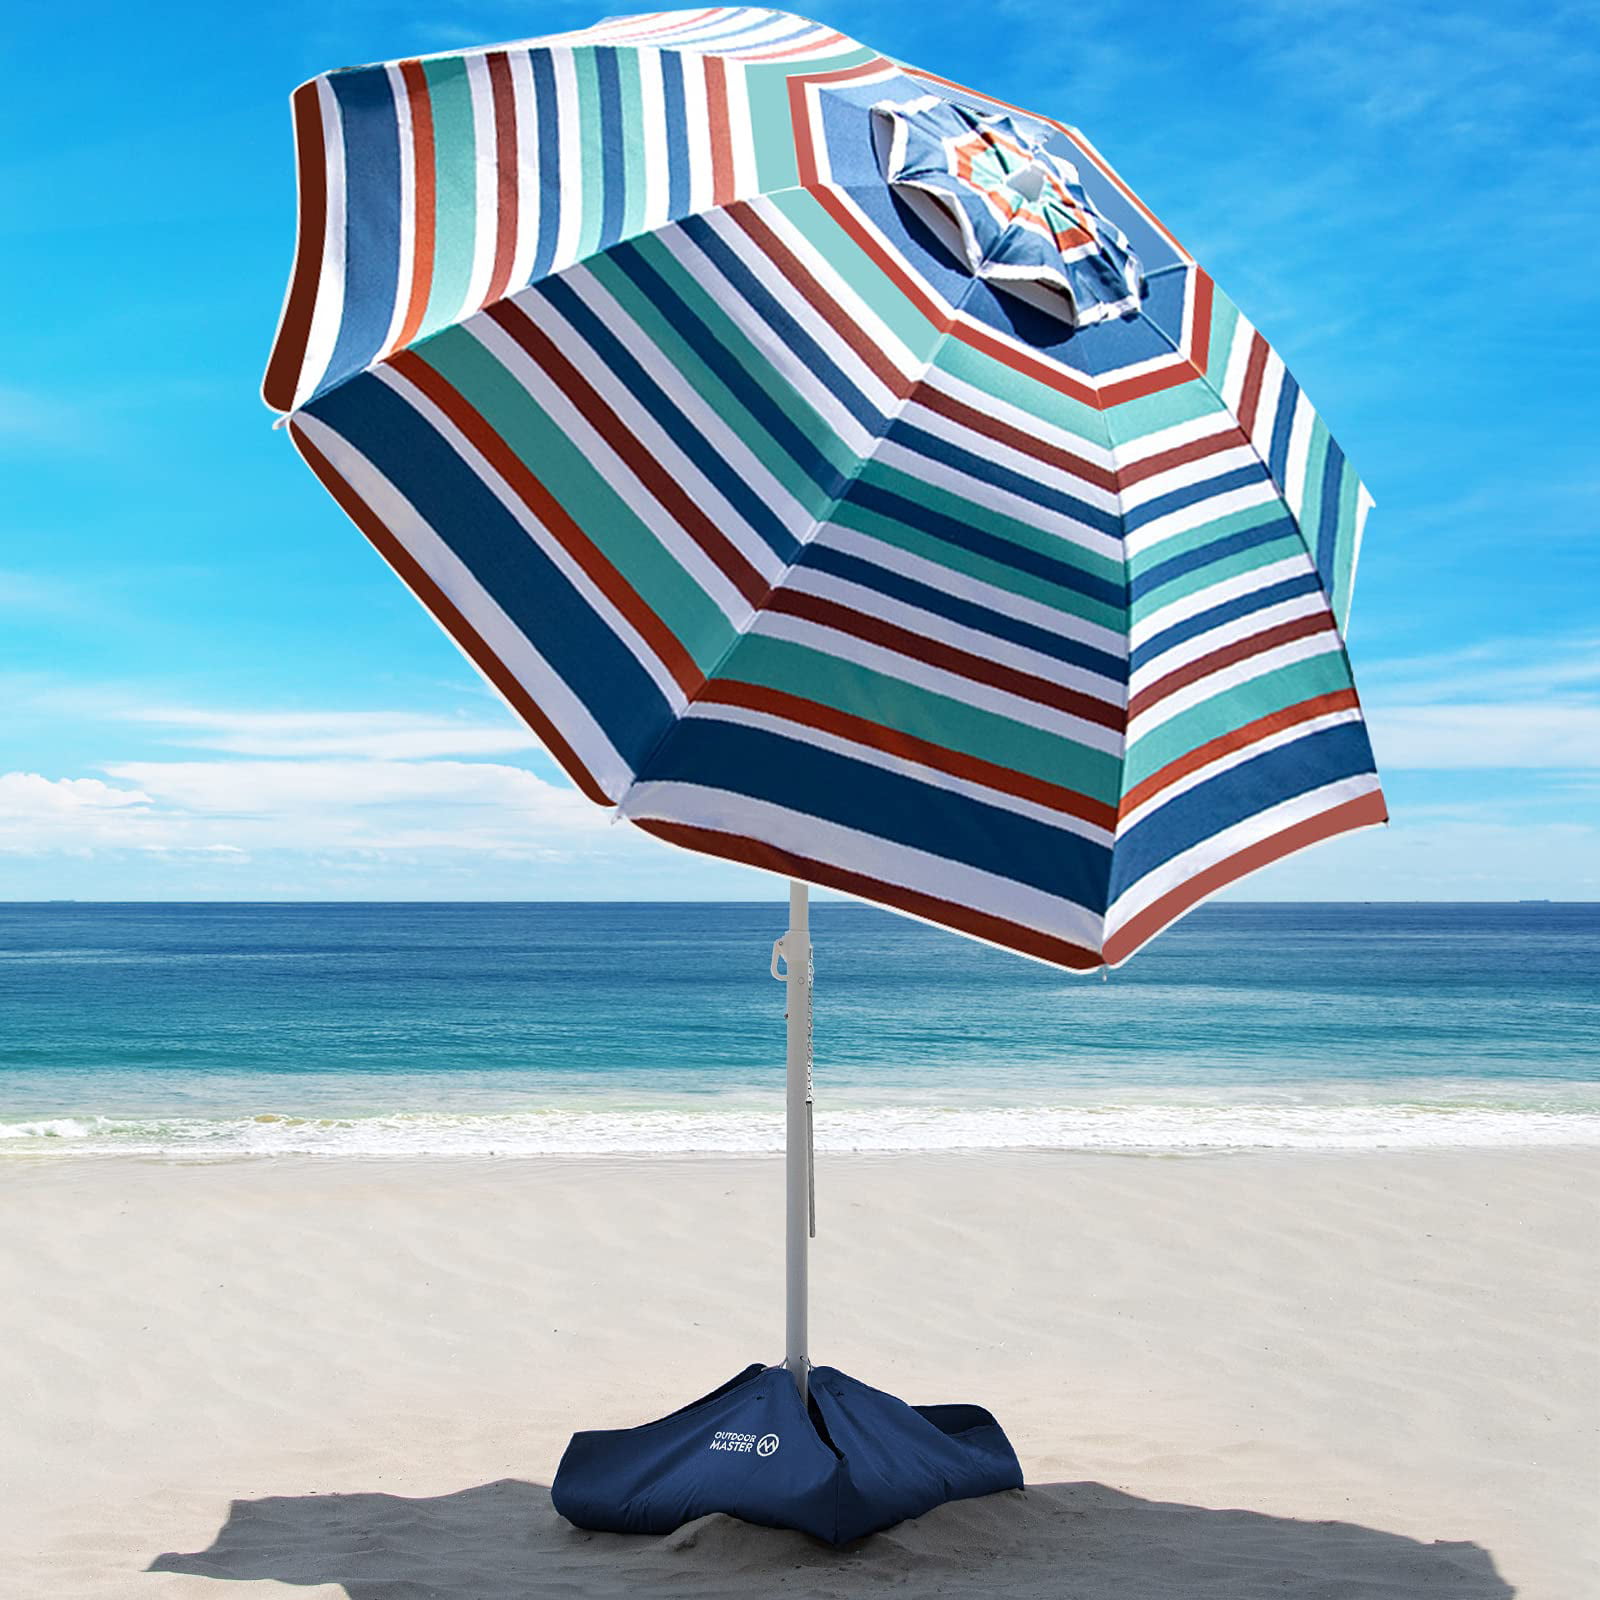 KITADIN 8.5FT Beach Umbrella for Sand Portable Outdoor Beach Umbrella with Sand Anchor Fiberglass Rib Push Button Tilt and Carry Bag Red&White 